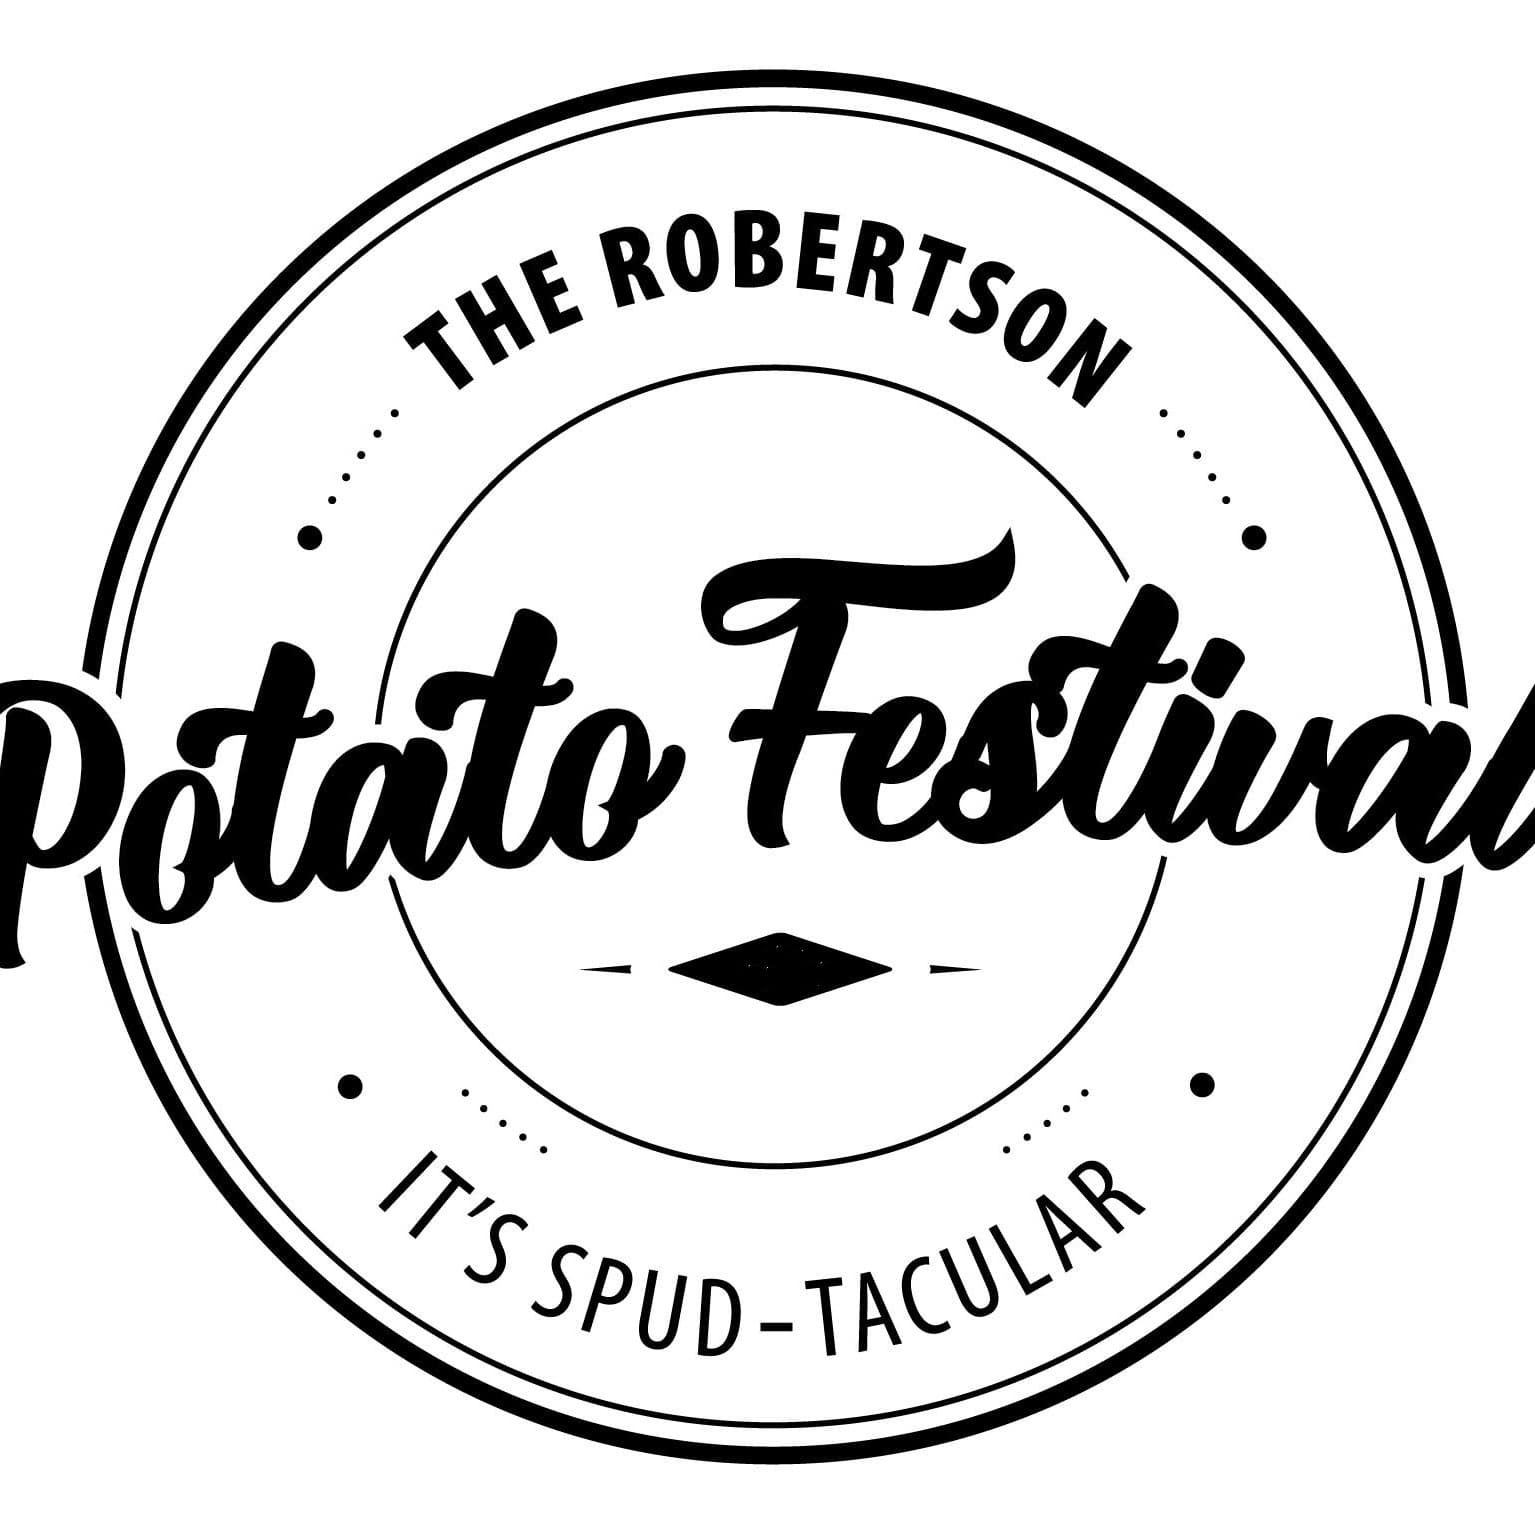 Robertson Potato Festival